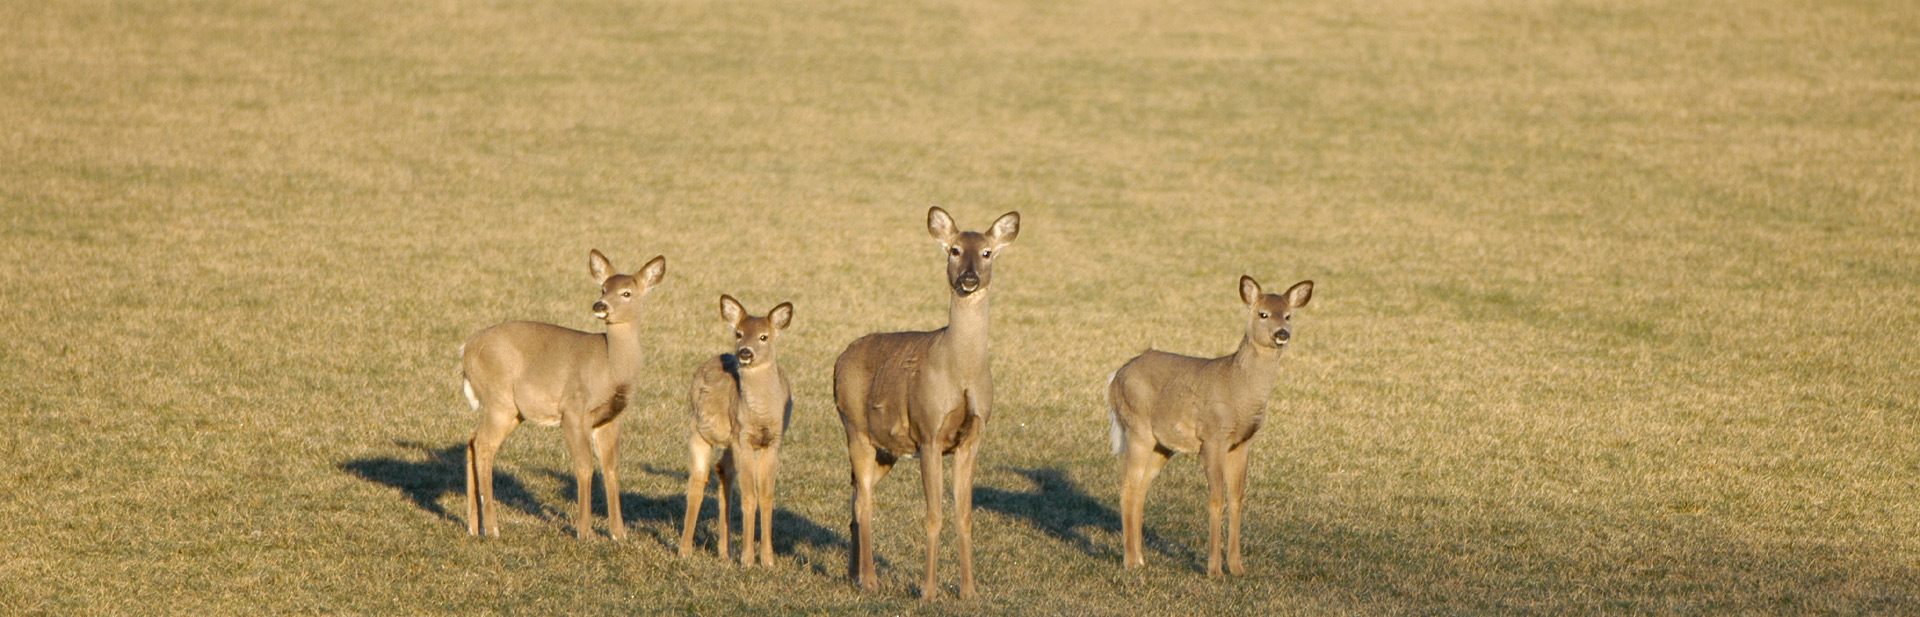 Small Herd of Deer in a field